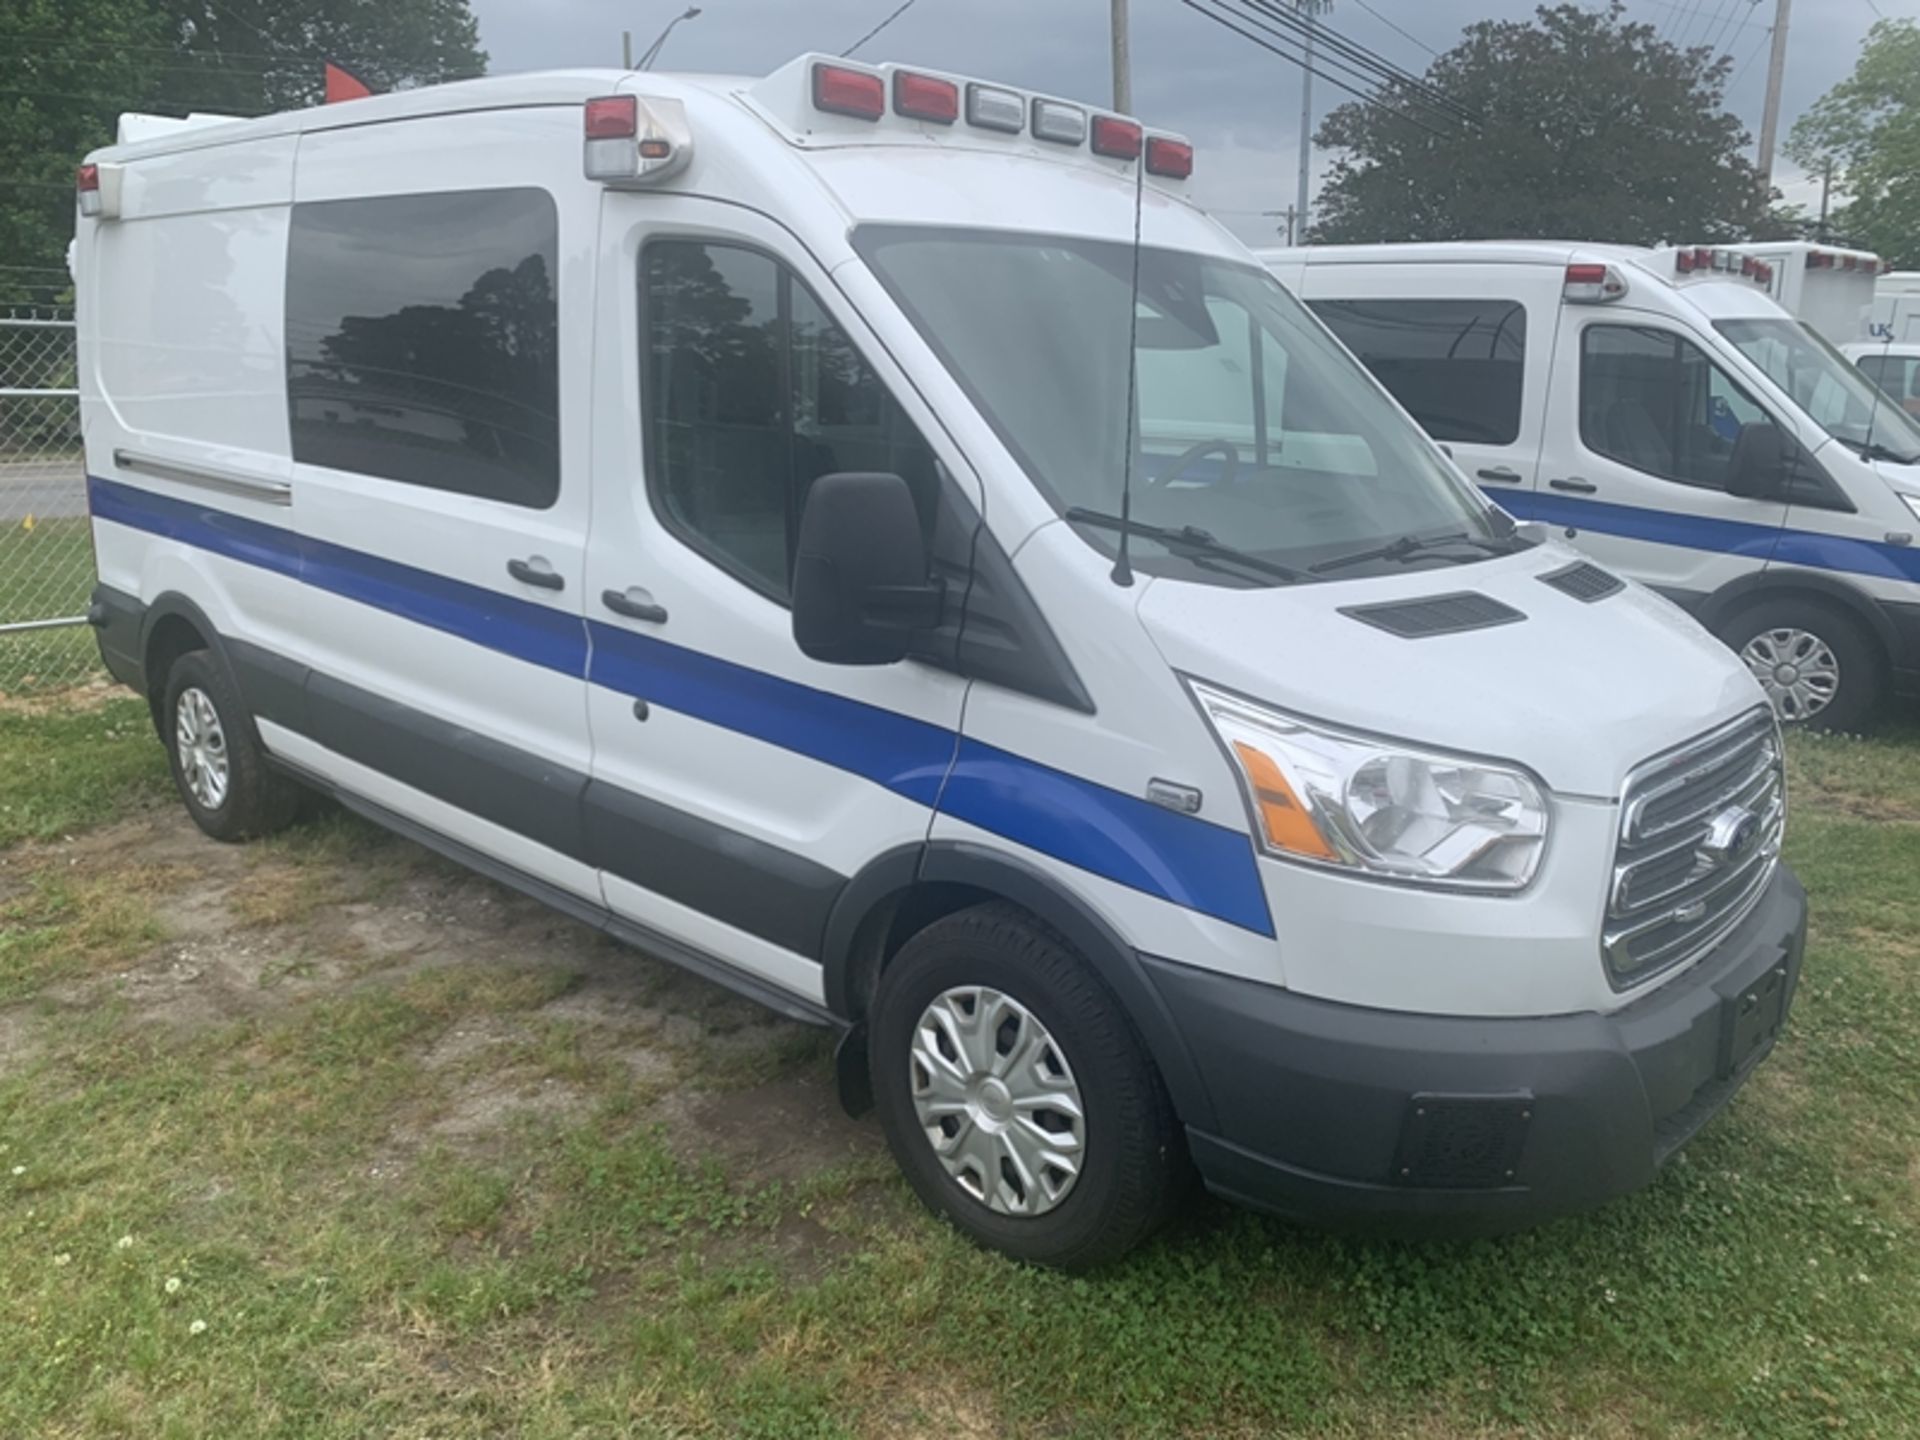 2018 FORD Transit 350 Sprinter Van, Type II Ambulance, 3.2L dsl - 162,758 miles - VIN: - Image 2 of 6